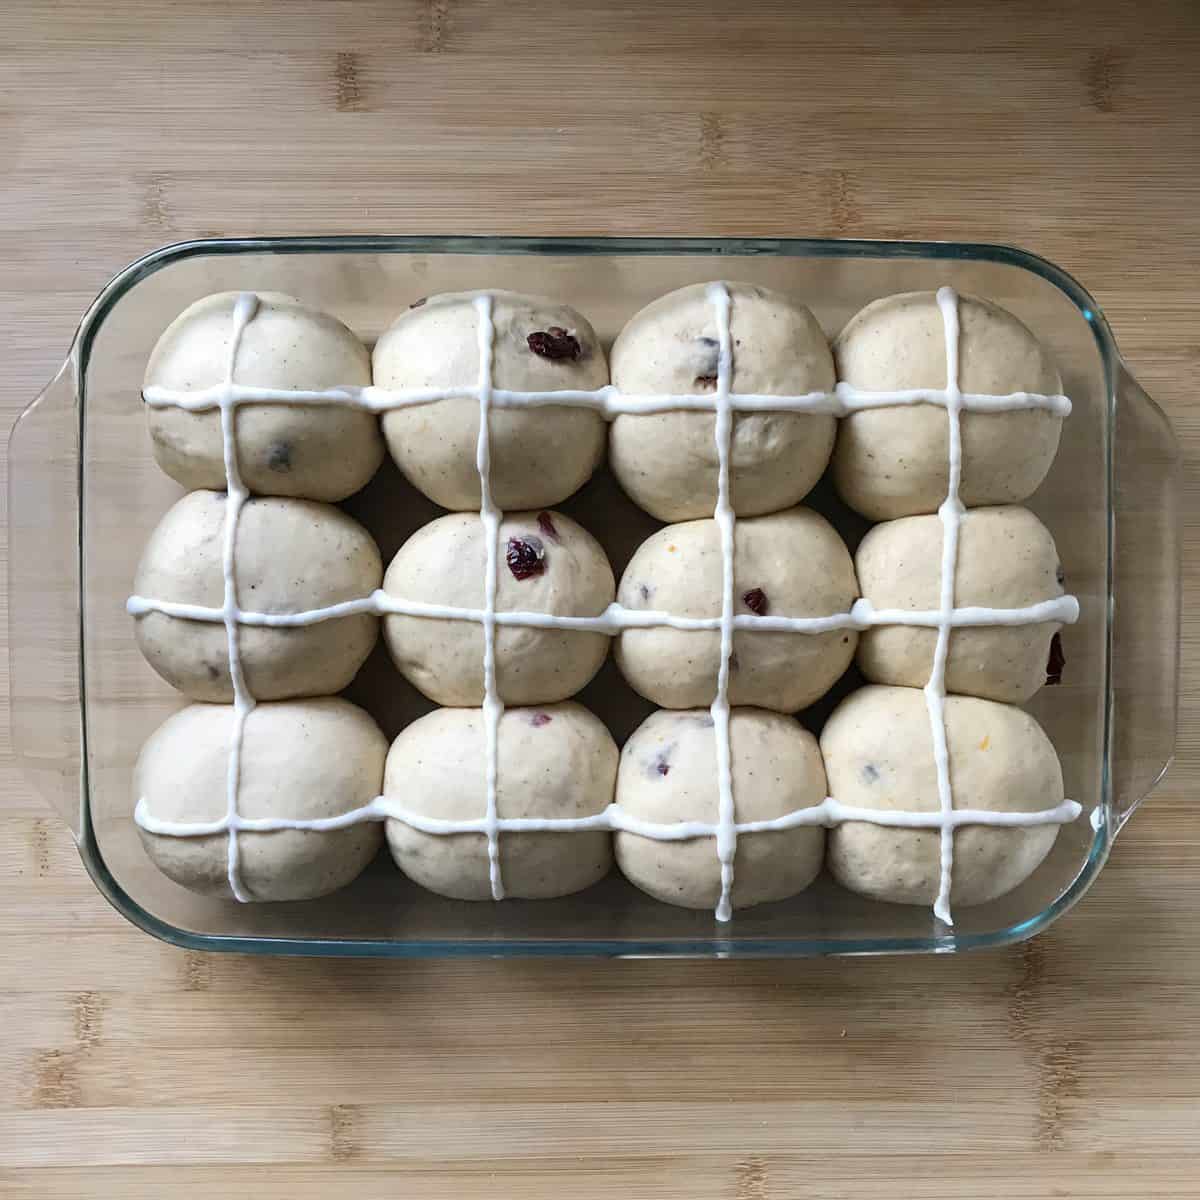 Hot cross buns with a white flour cross. 